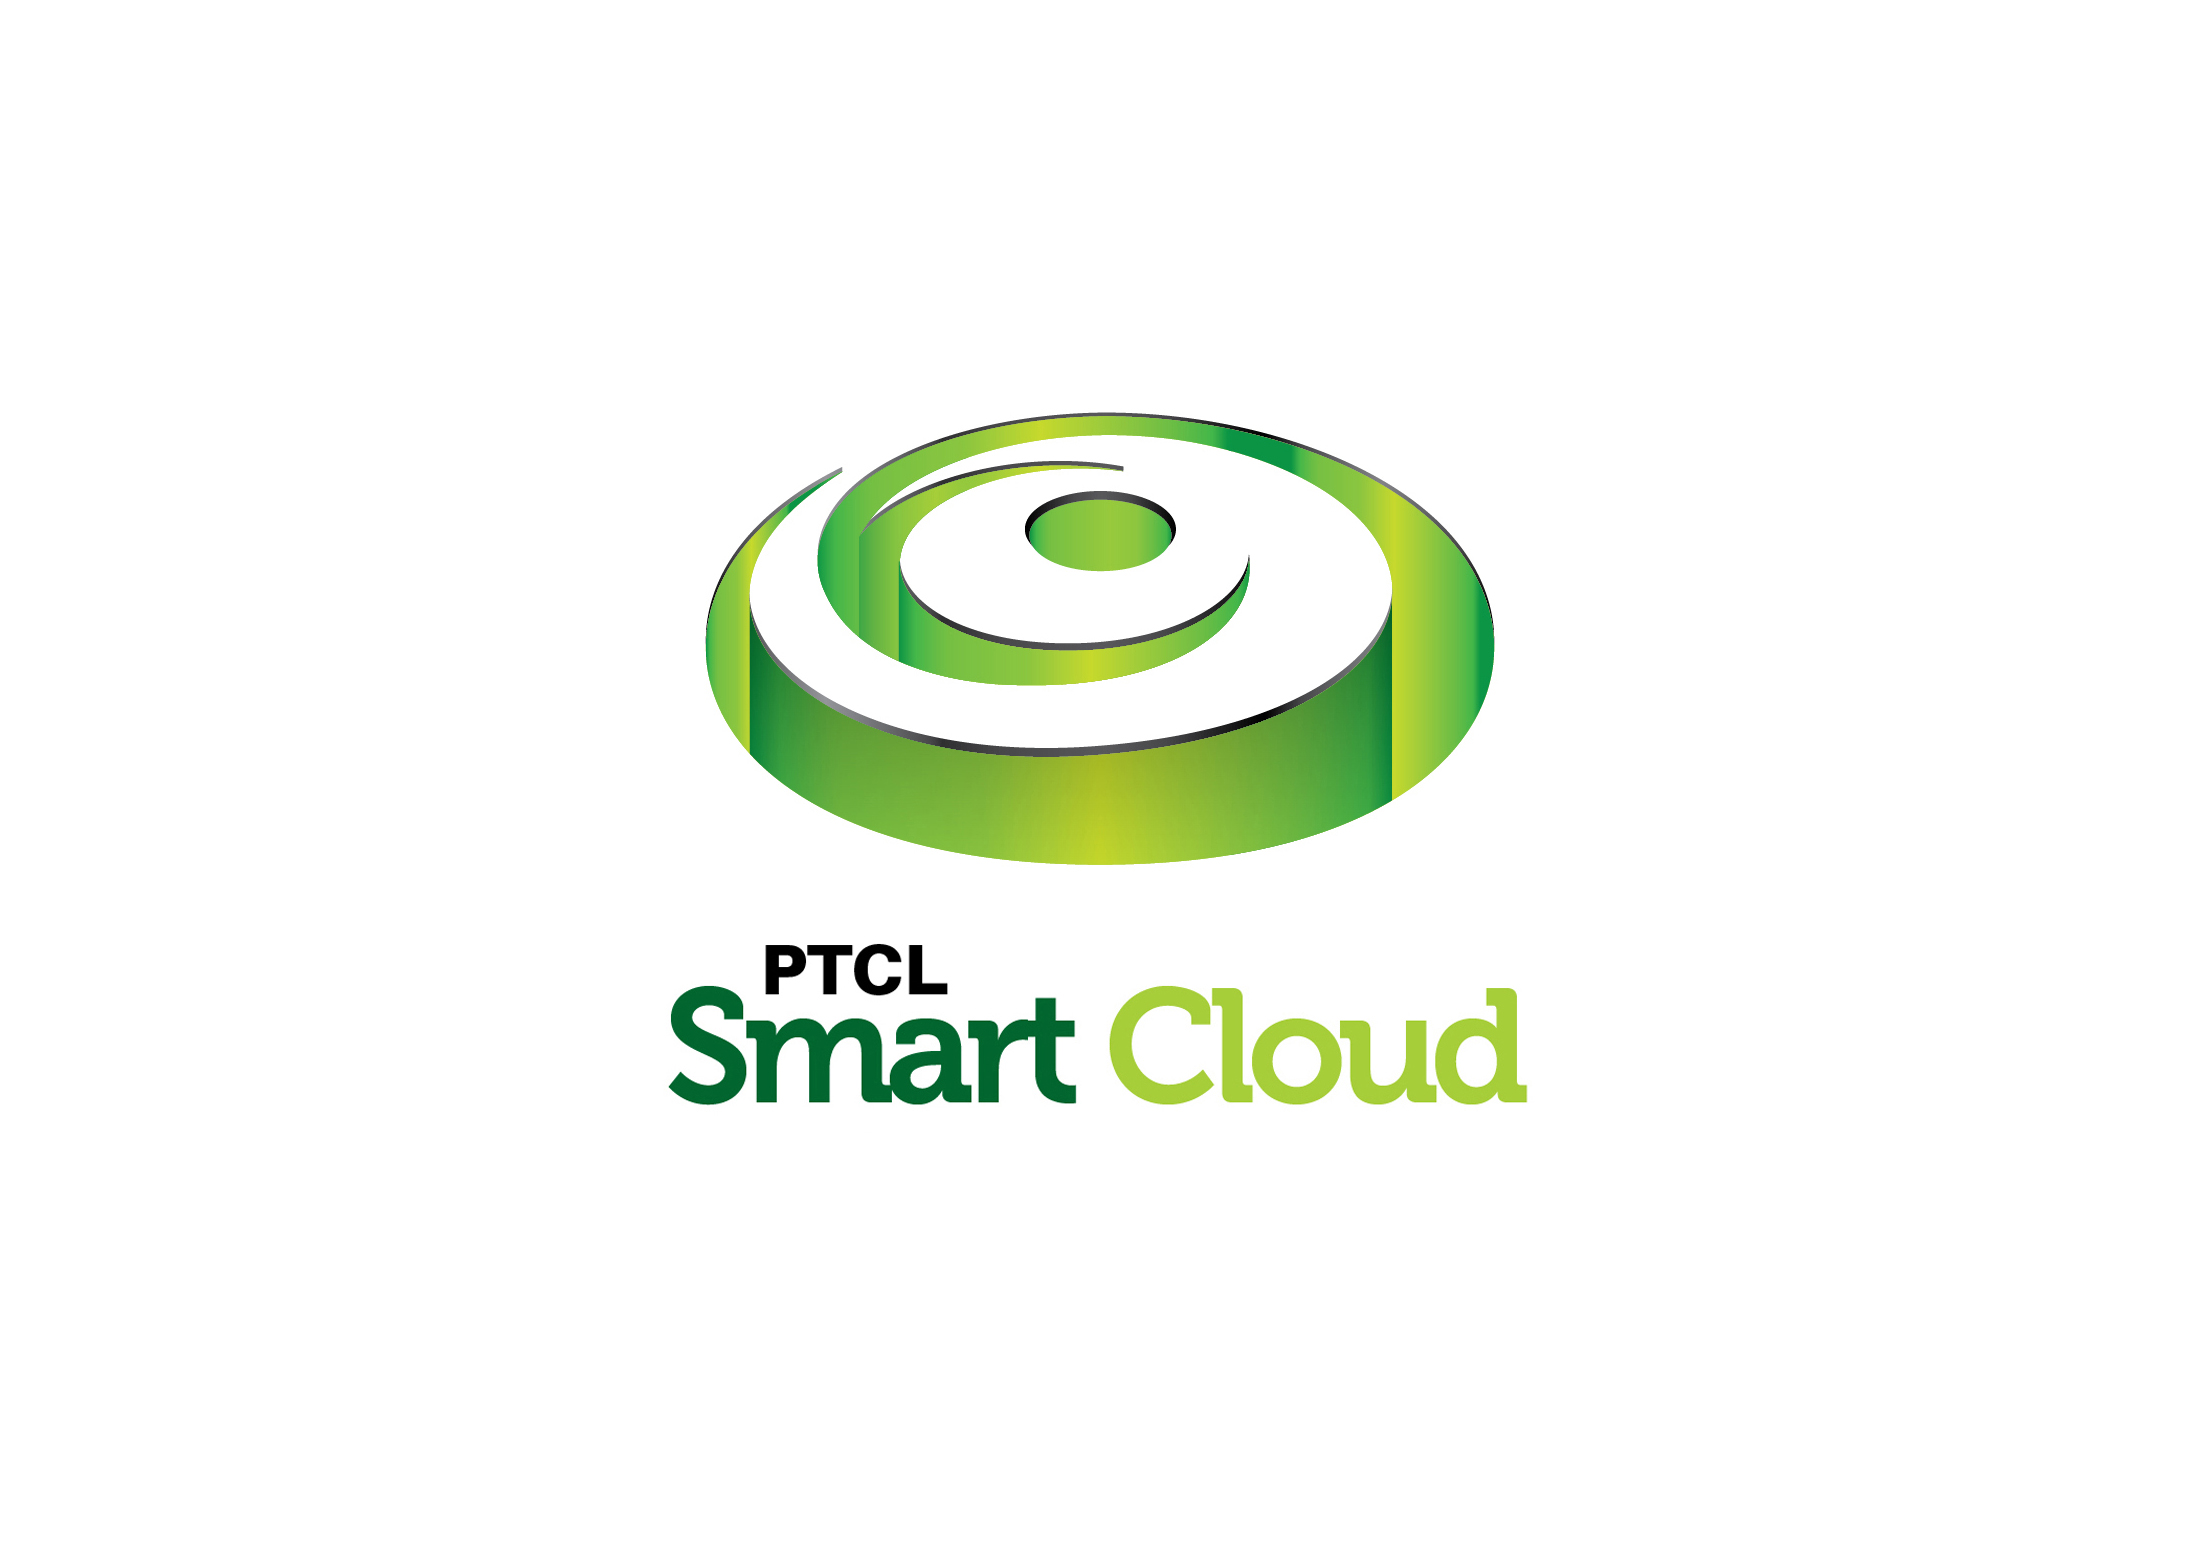 PTCL Introduces Smart Cloud for Business